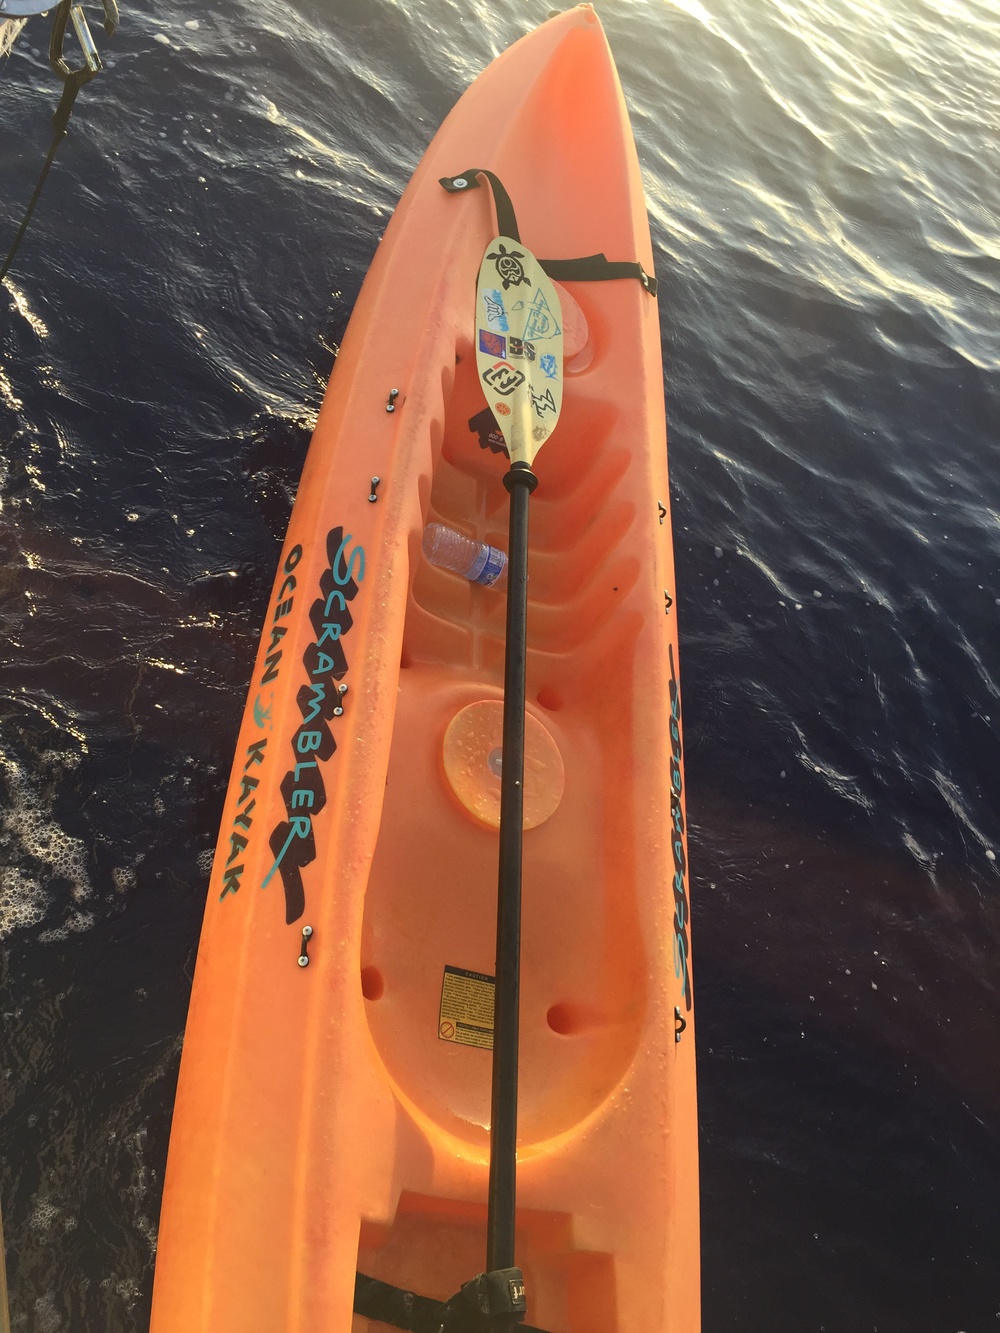 Coast Guard seeking public's help in locating owner of adrift kayak